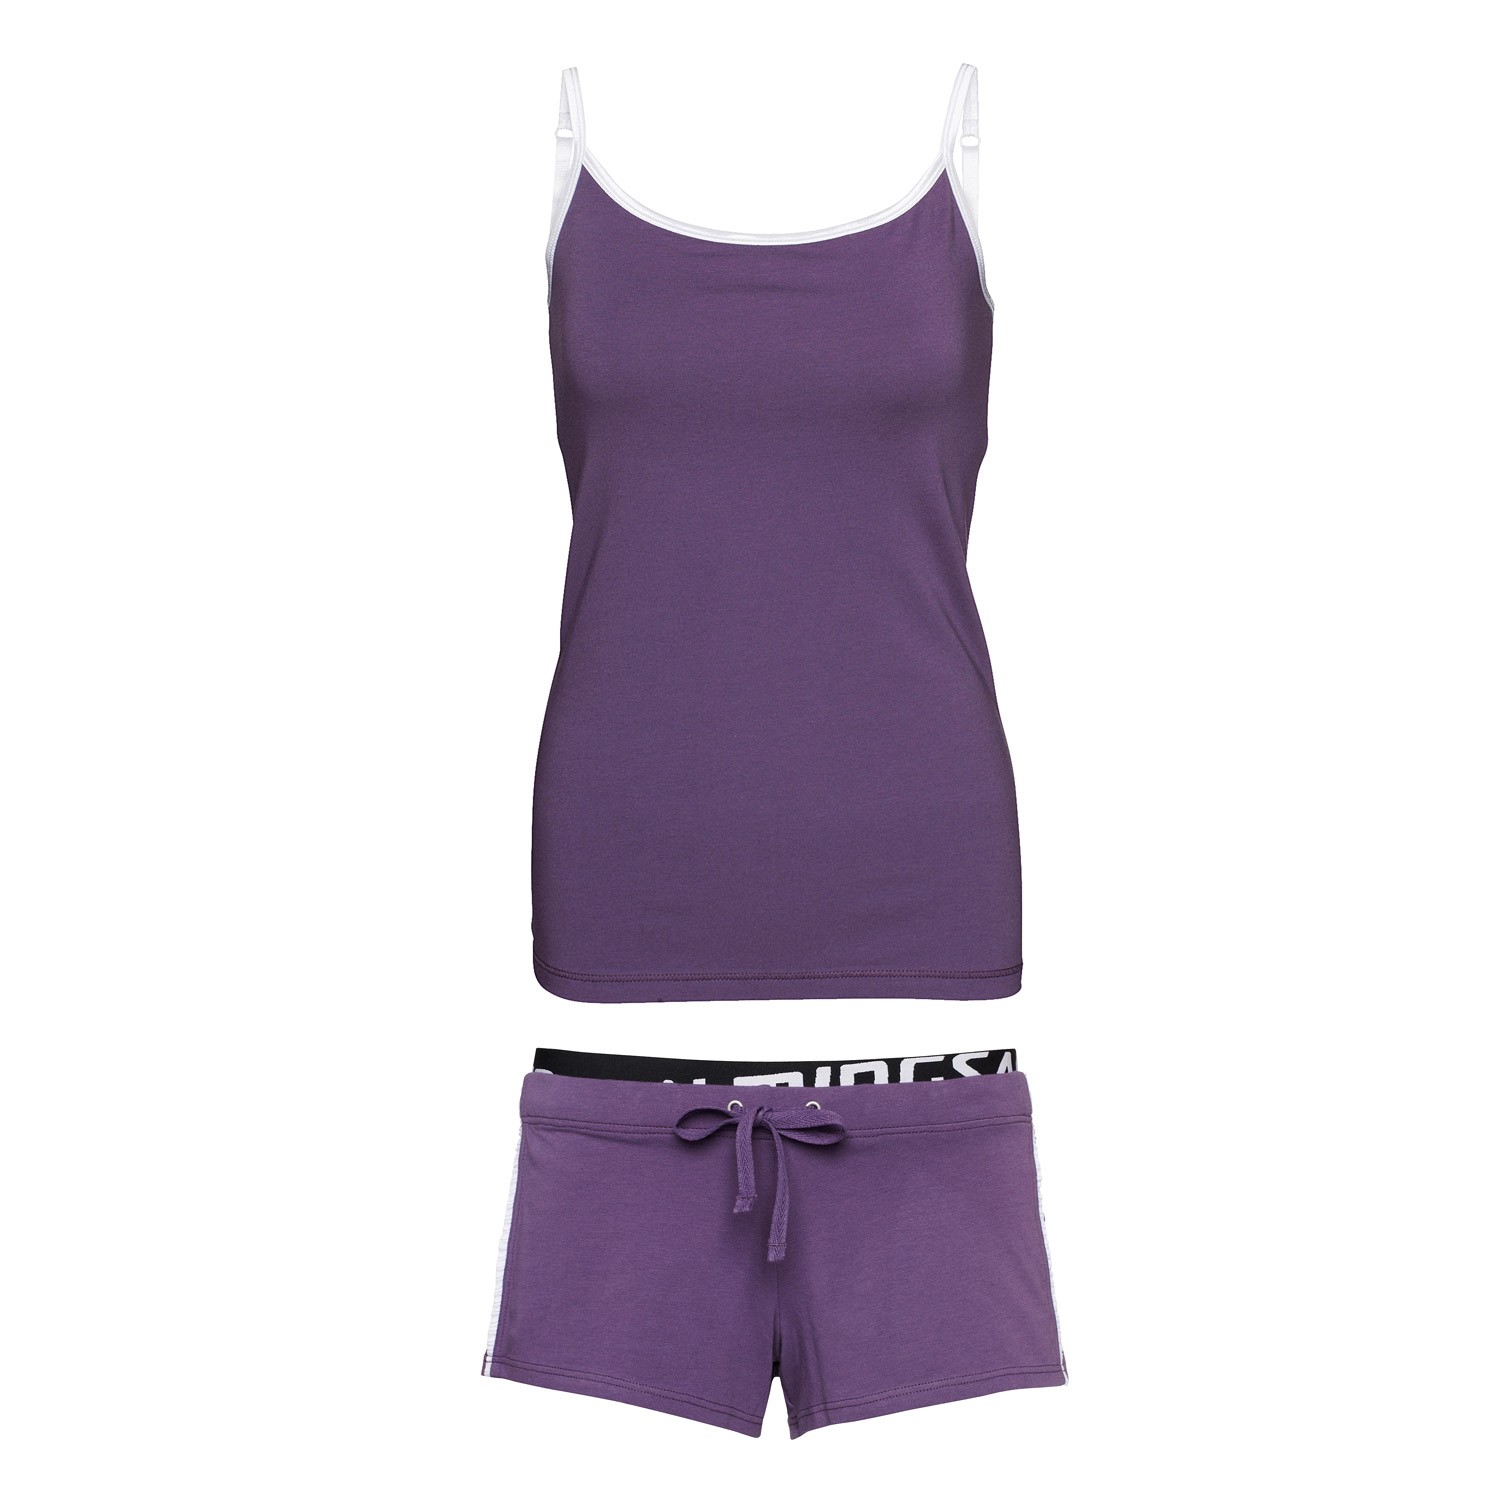 Salming Muskoka Singlet and Shorts Purple